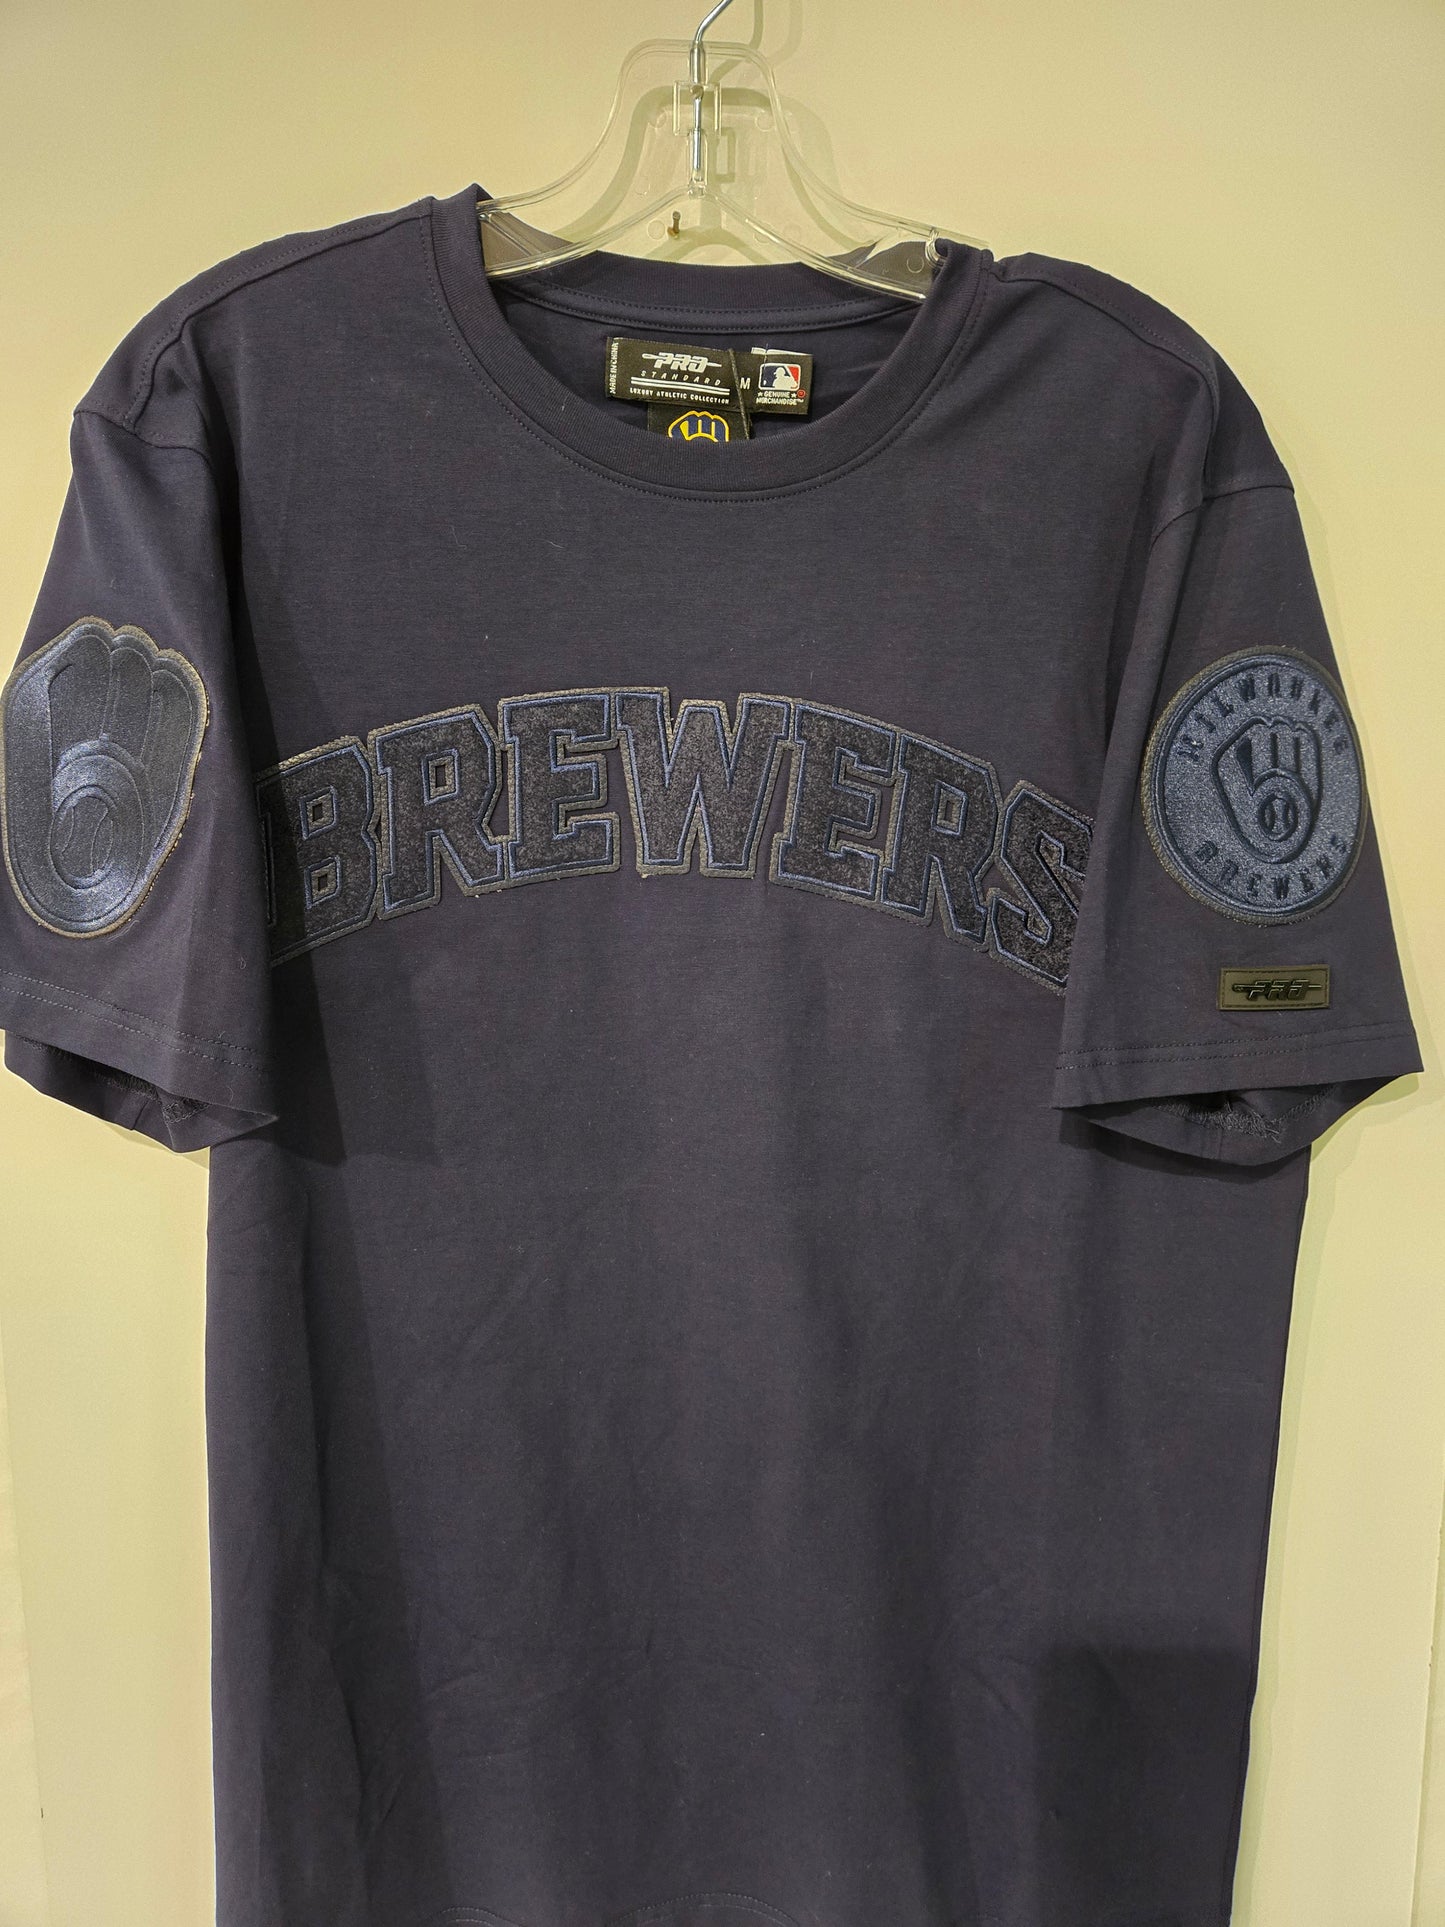 Milwaukee Brewers Shirt Navy on Navy